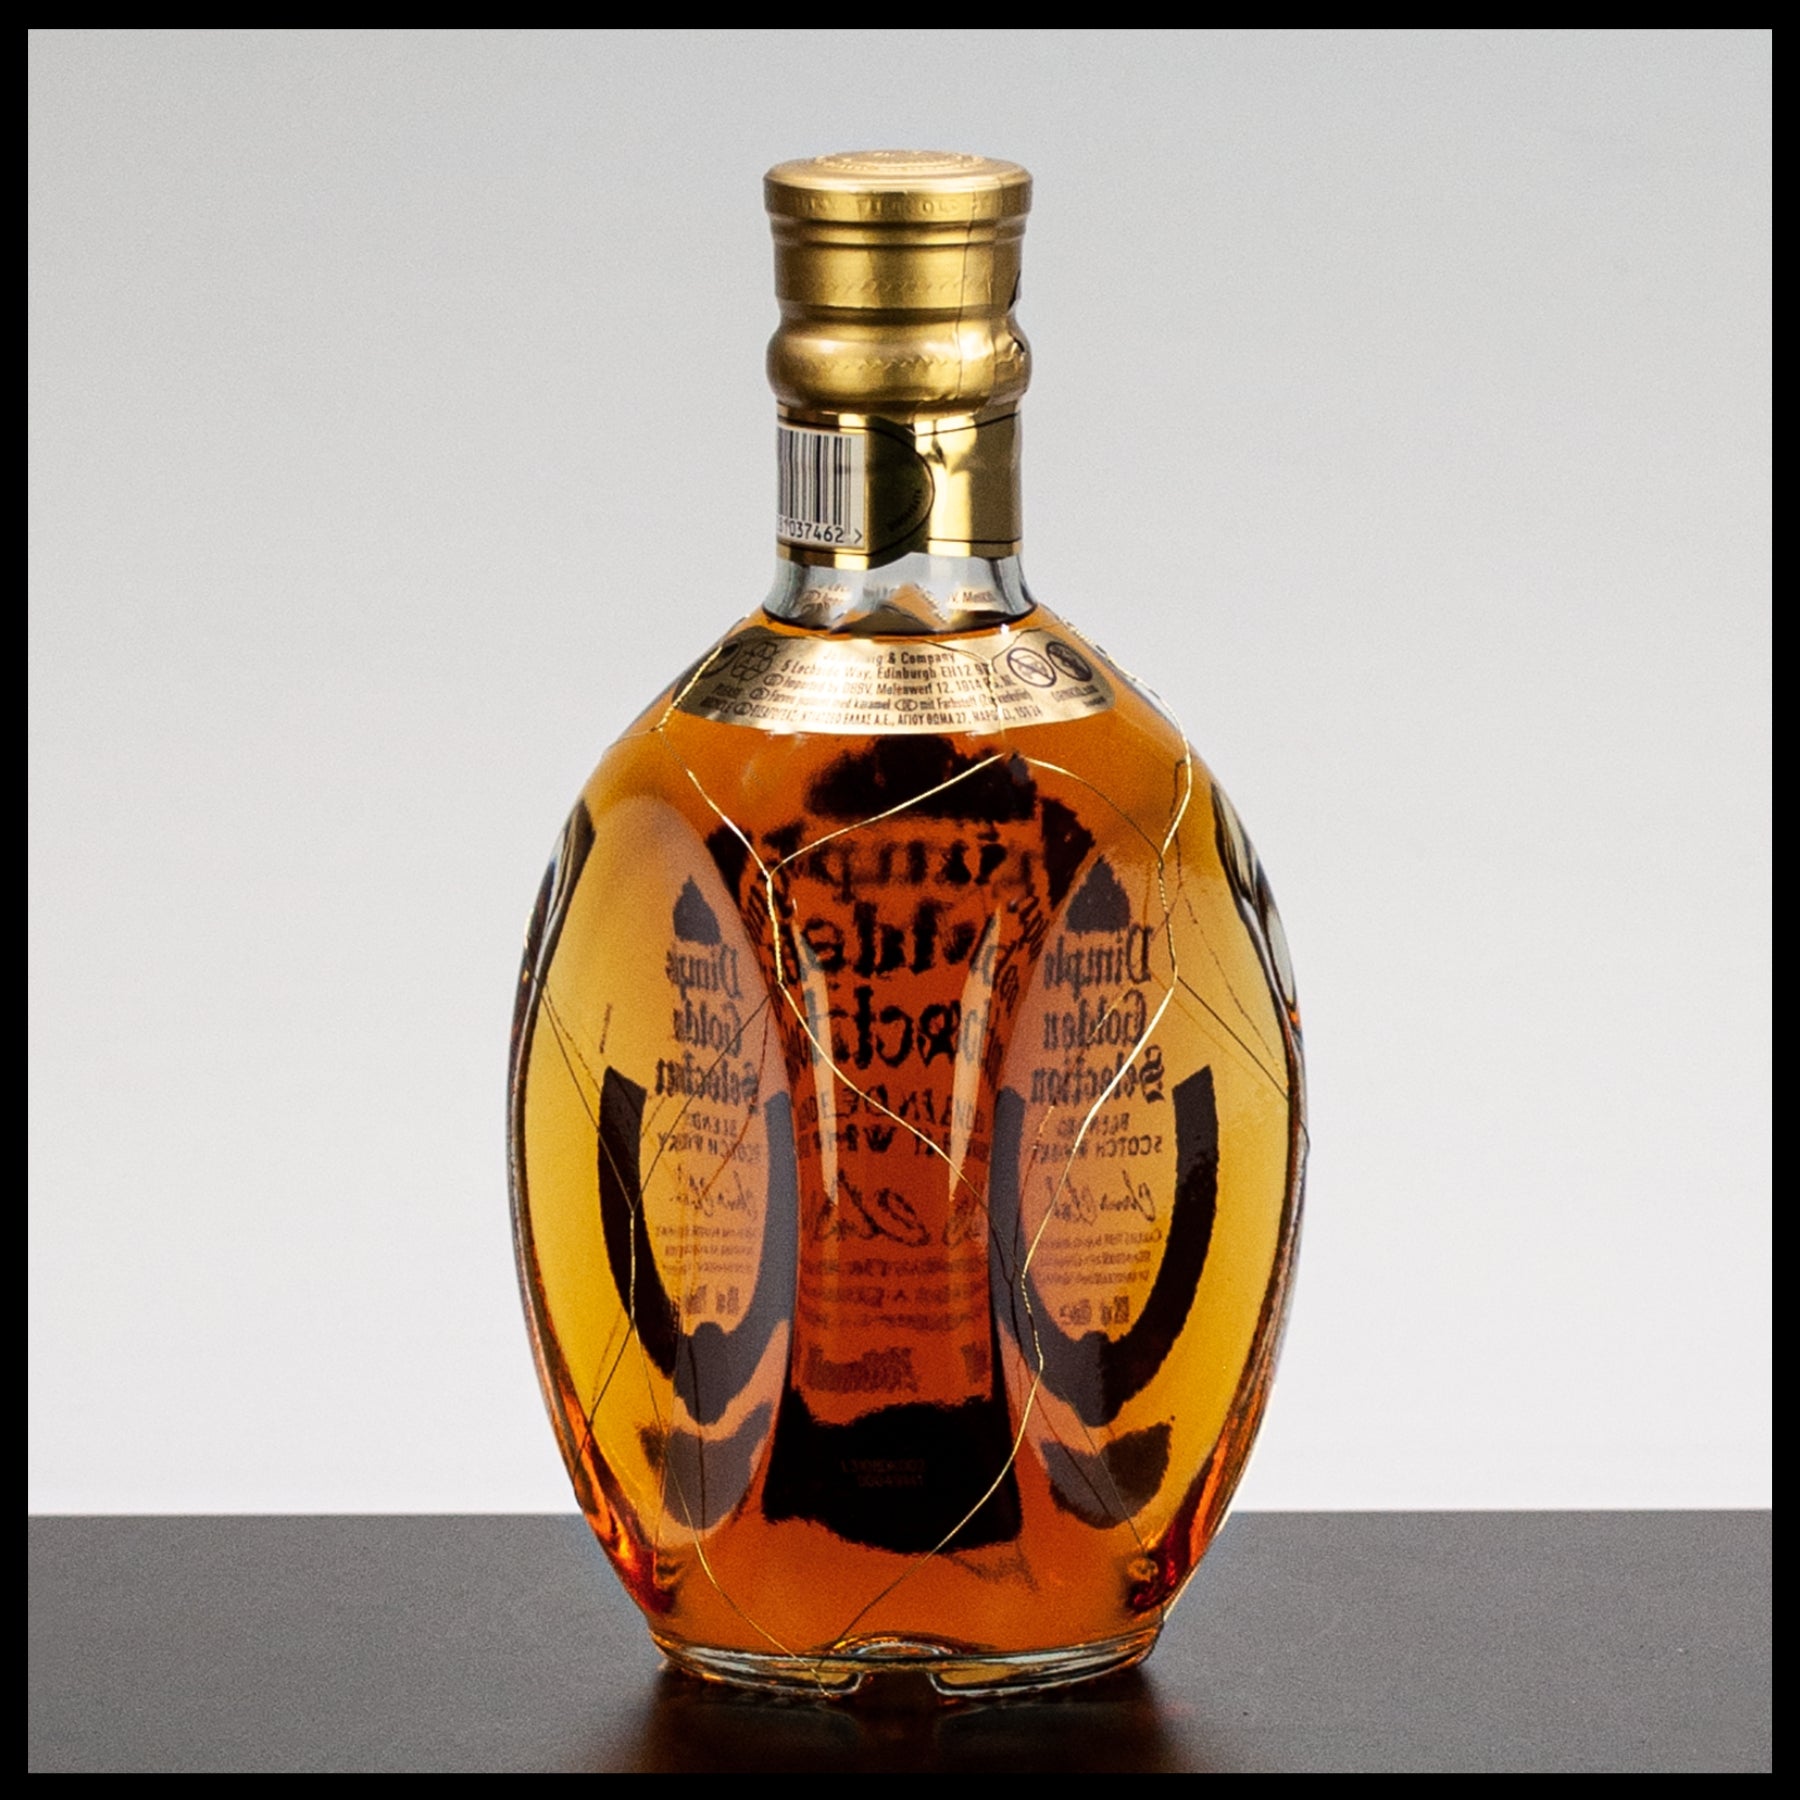 Dimple Golden Selection Blended Scotch Whisky 0,7L - 40%